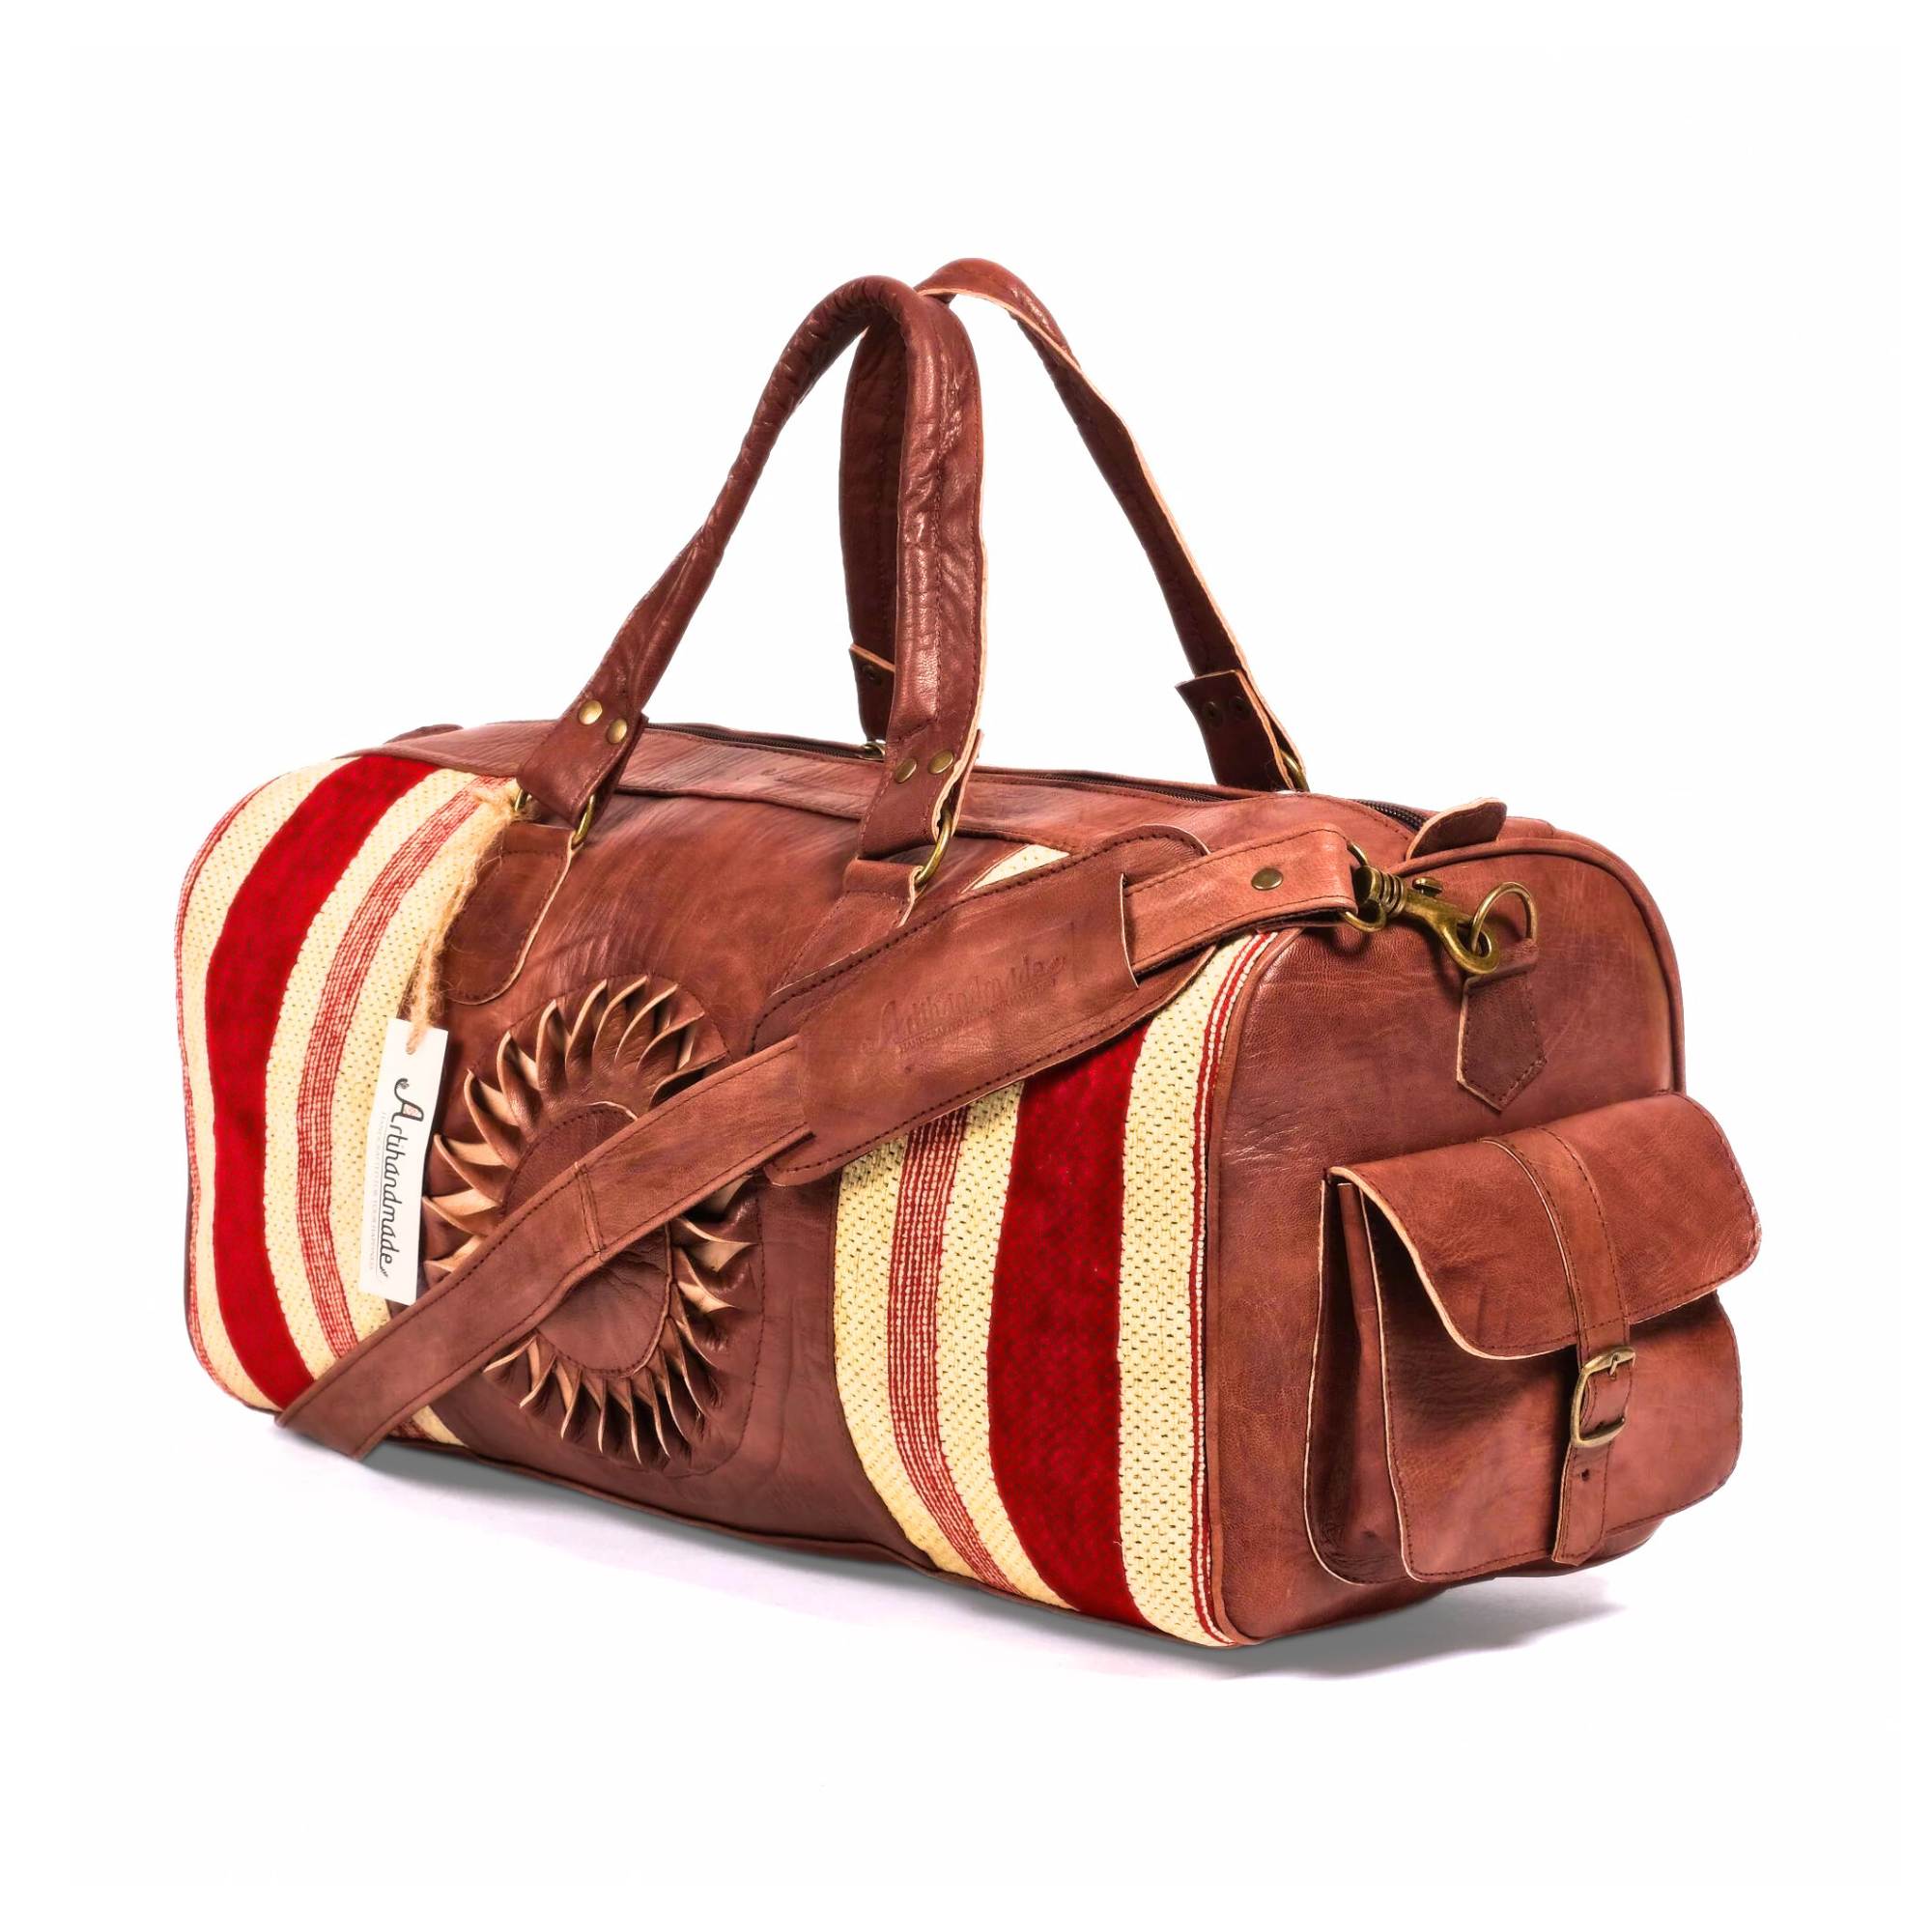 The Sun Duffle Bag, Leather Kilim Travel Bag - Brown And Dark Brown